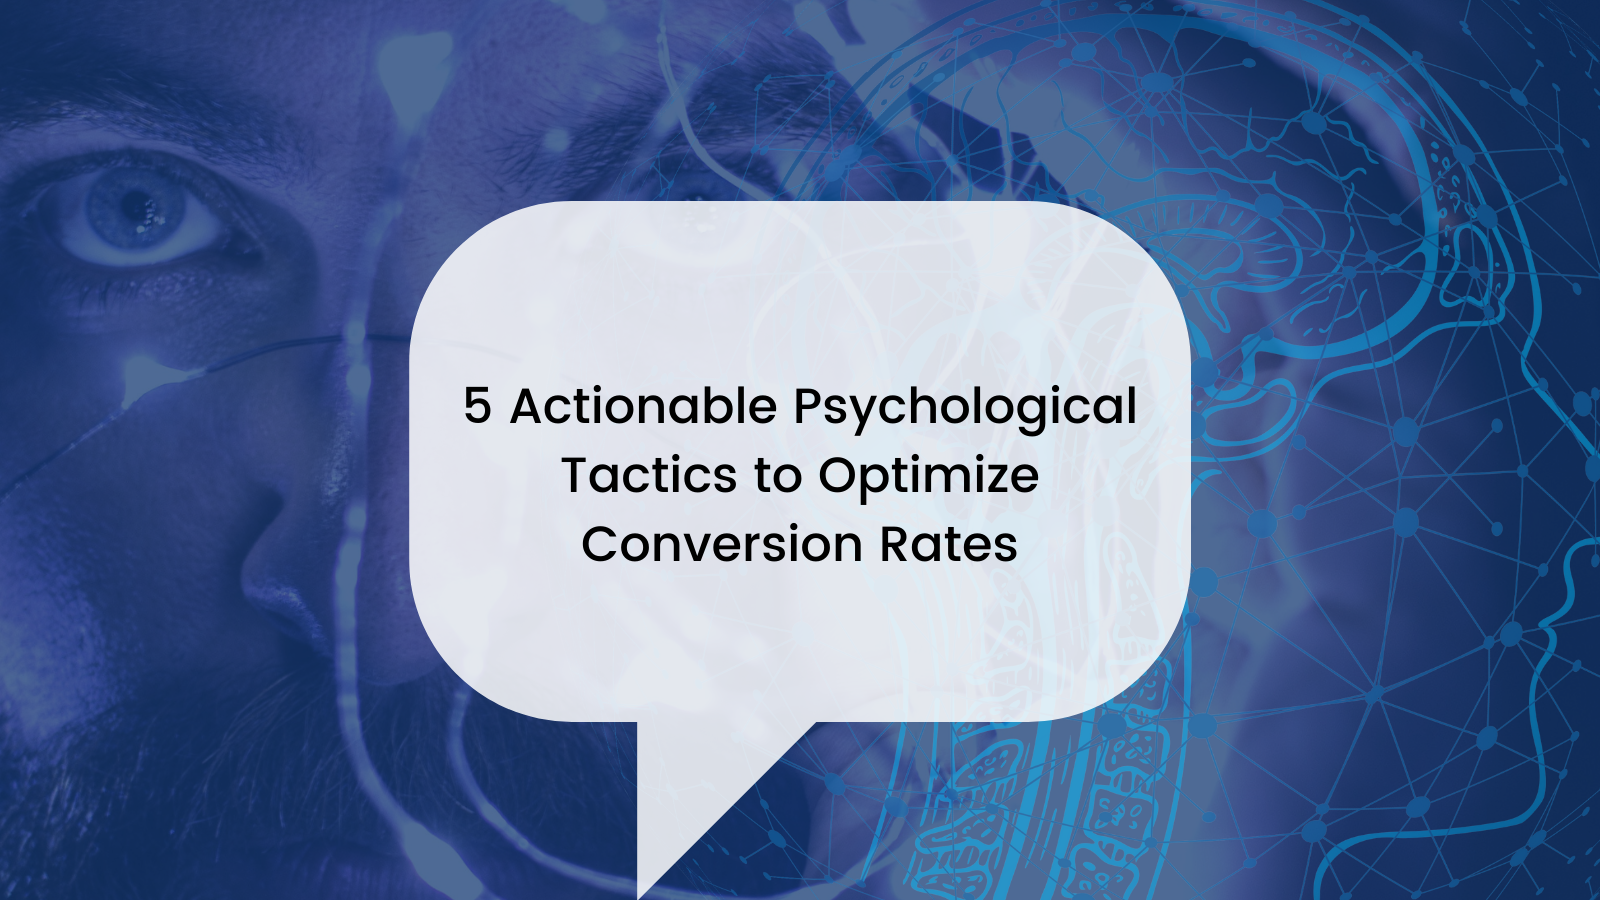 5 Actionable Psychological Tactics to Optimize Conversion Rates